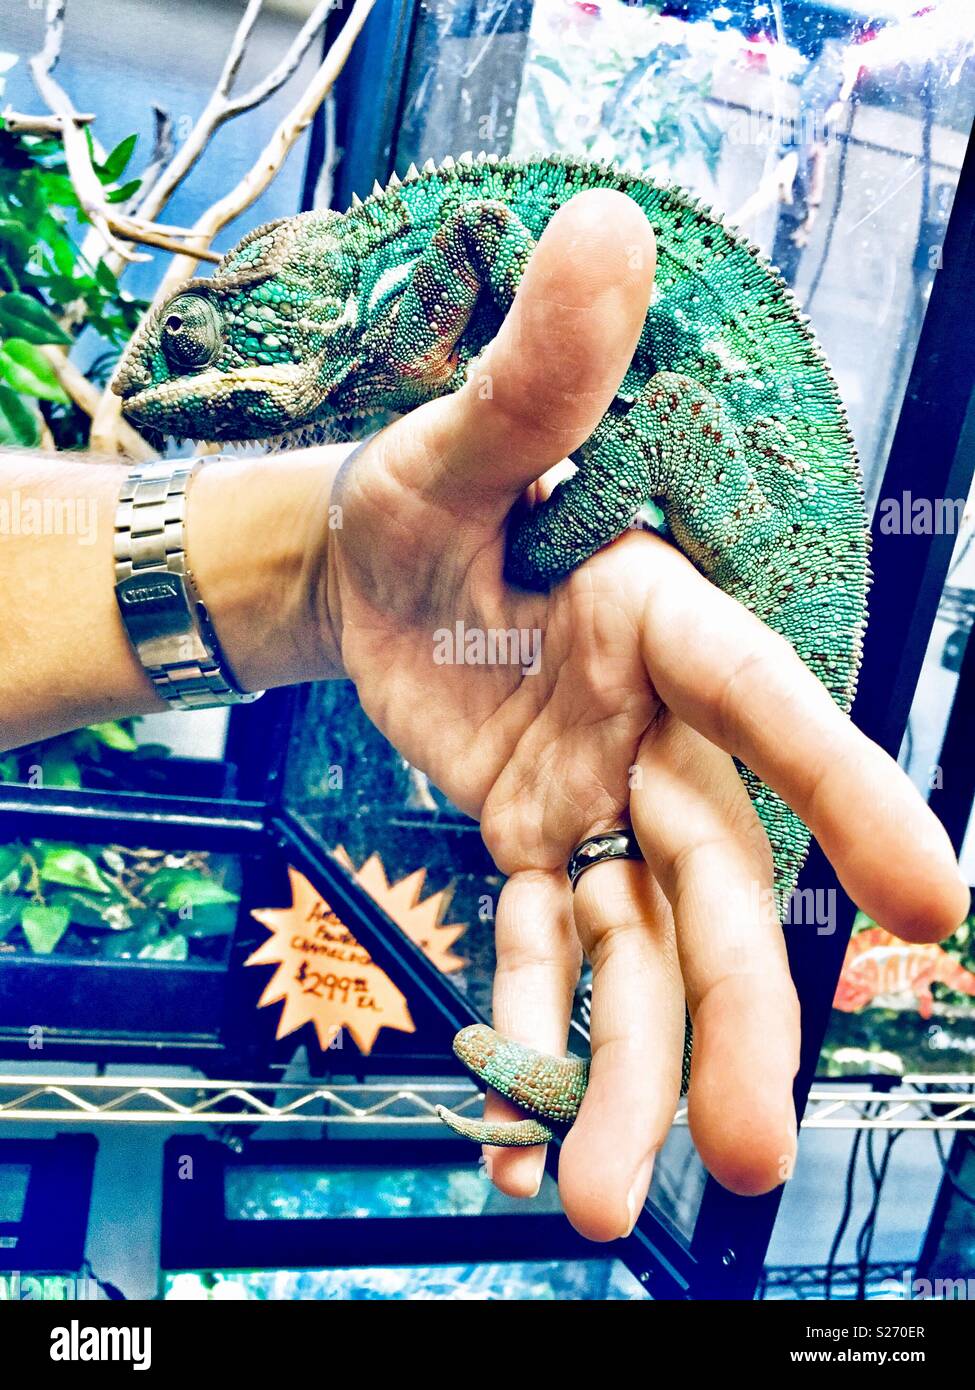 Ambilobe panther chameleon on man’s hand Stock Photo